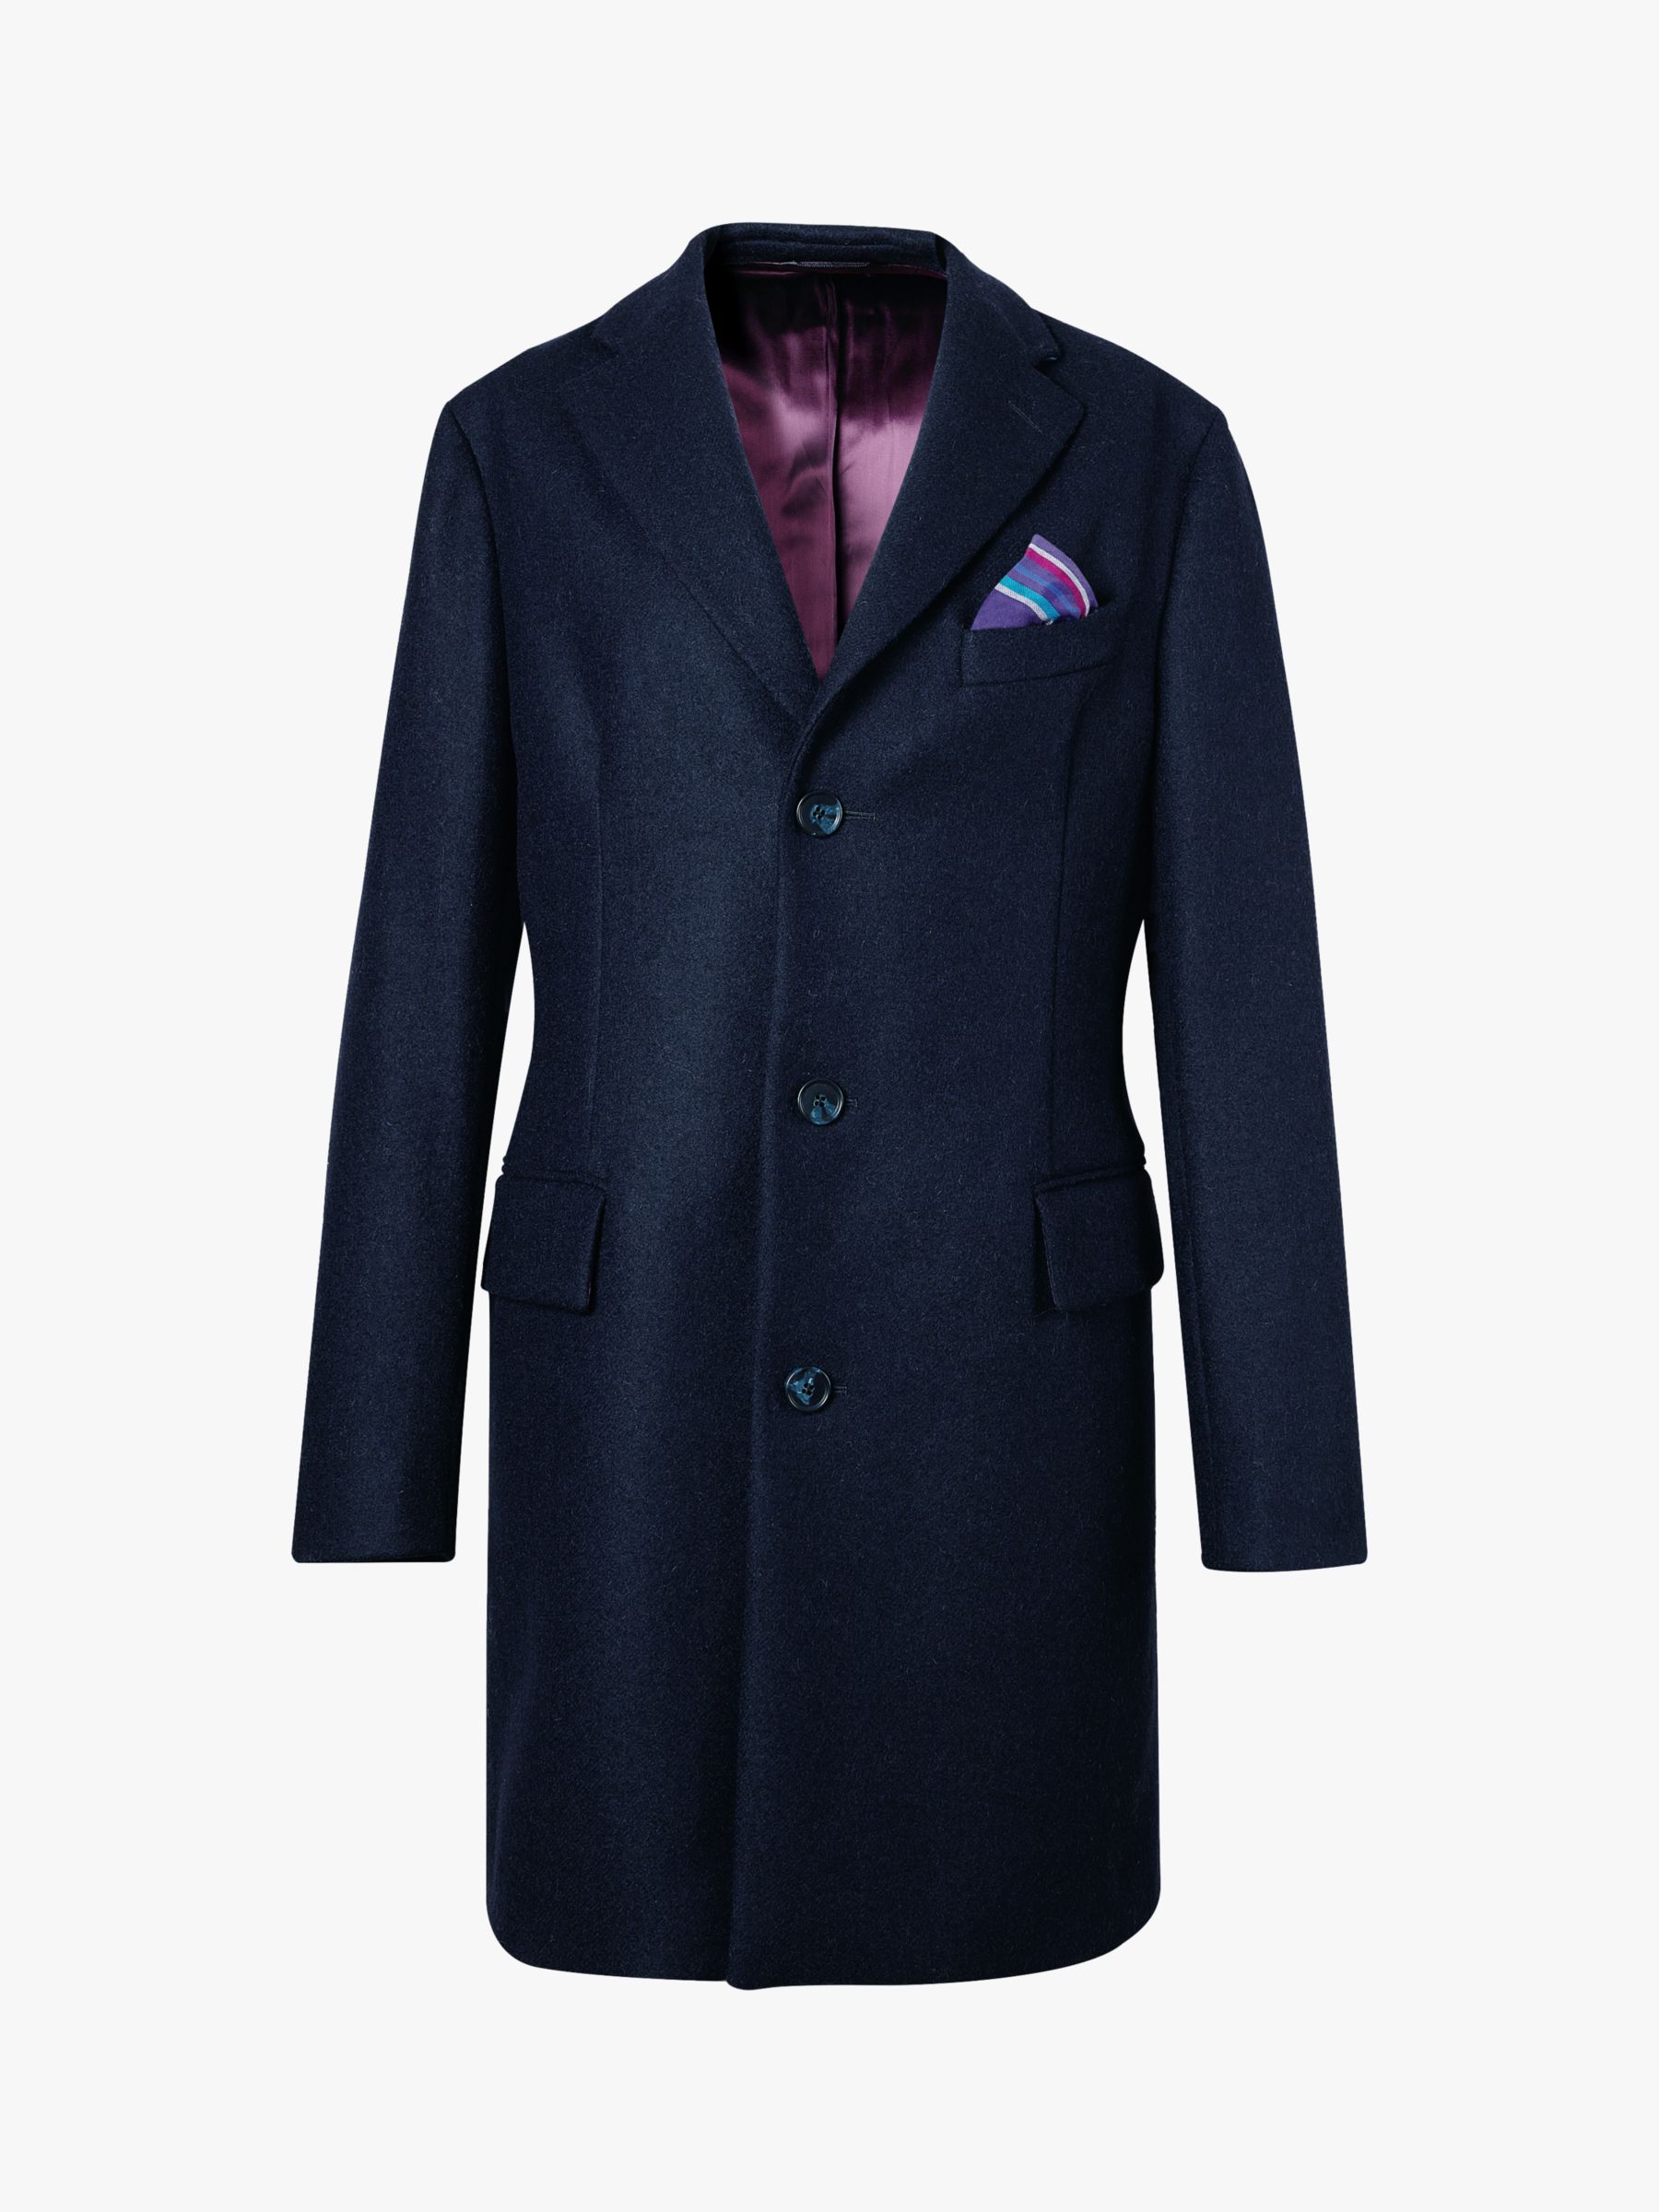 Buy KOY Heritage British Wool Tailored Fit Overcoat, Navy Online at johnlewis.com